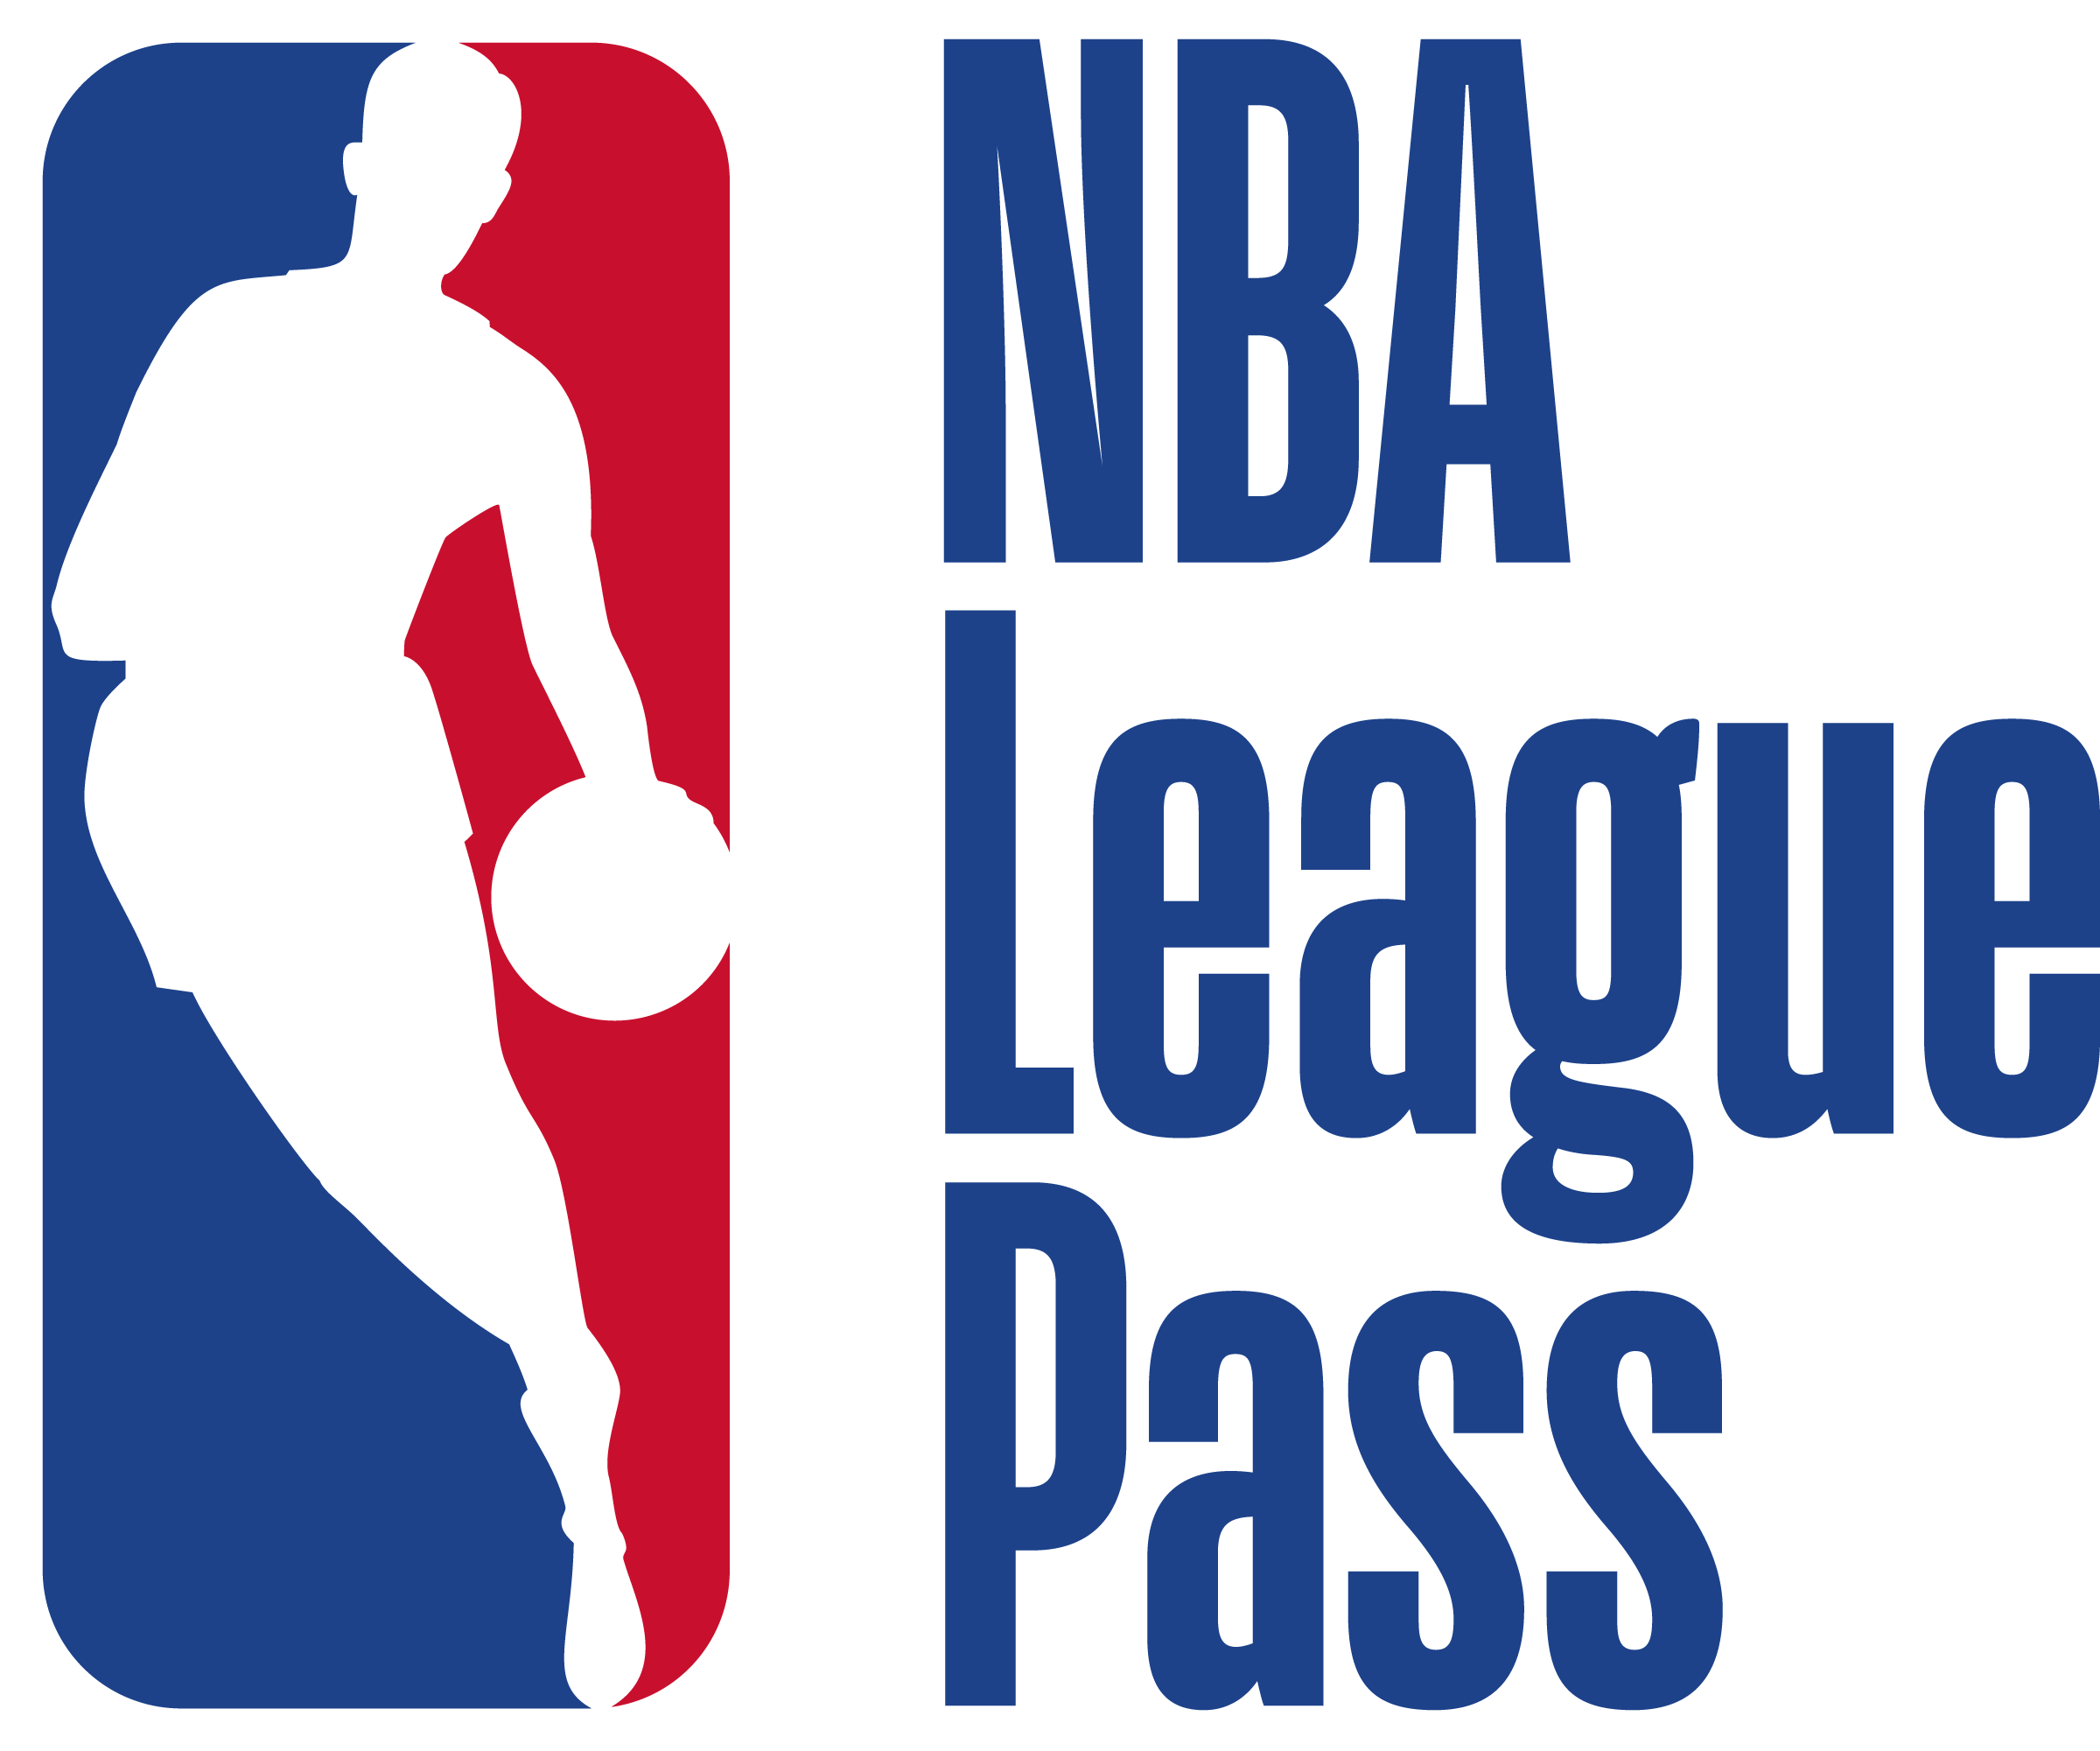 Watch NBA Basketball Games Live Online Sling TV